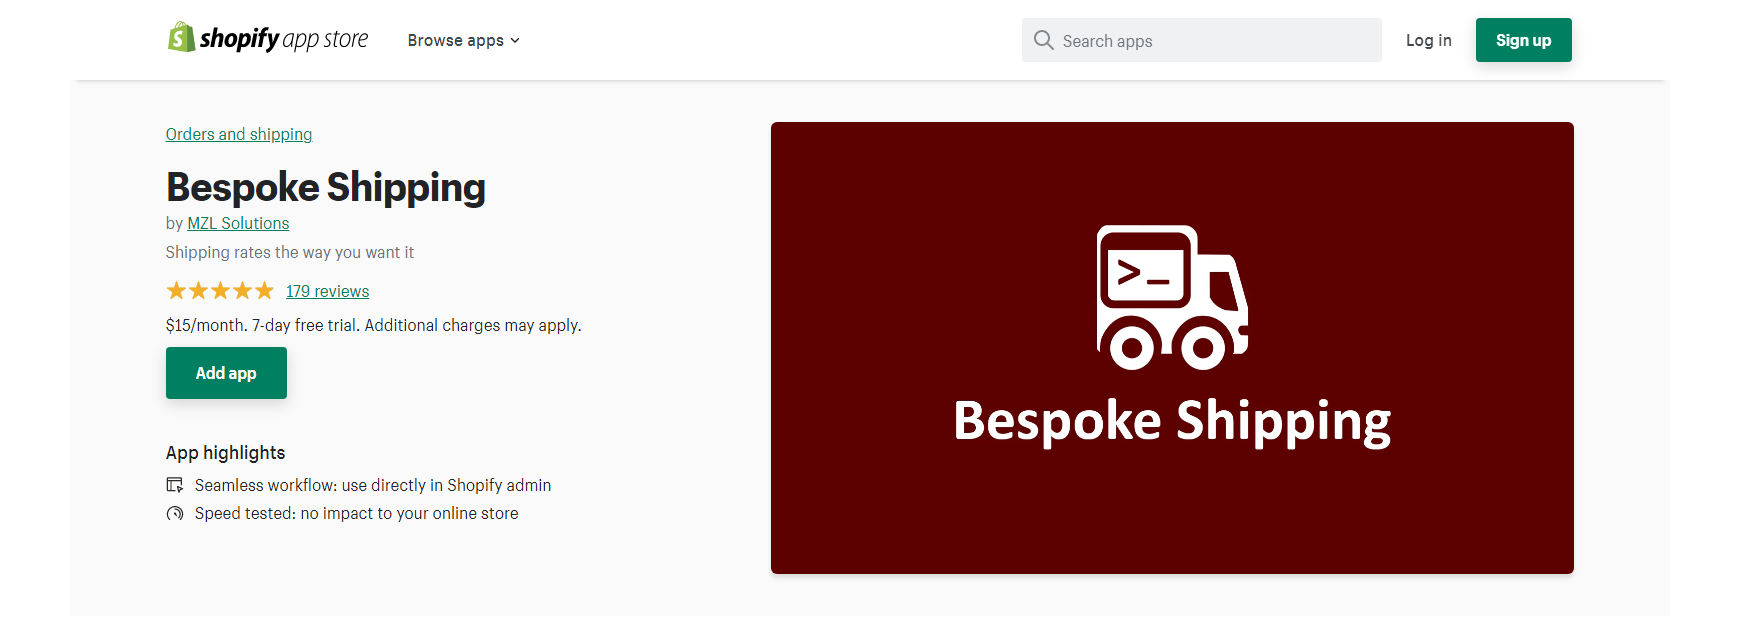 Bespoke Shipping - Shopify shipping apps